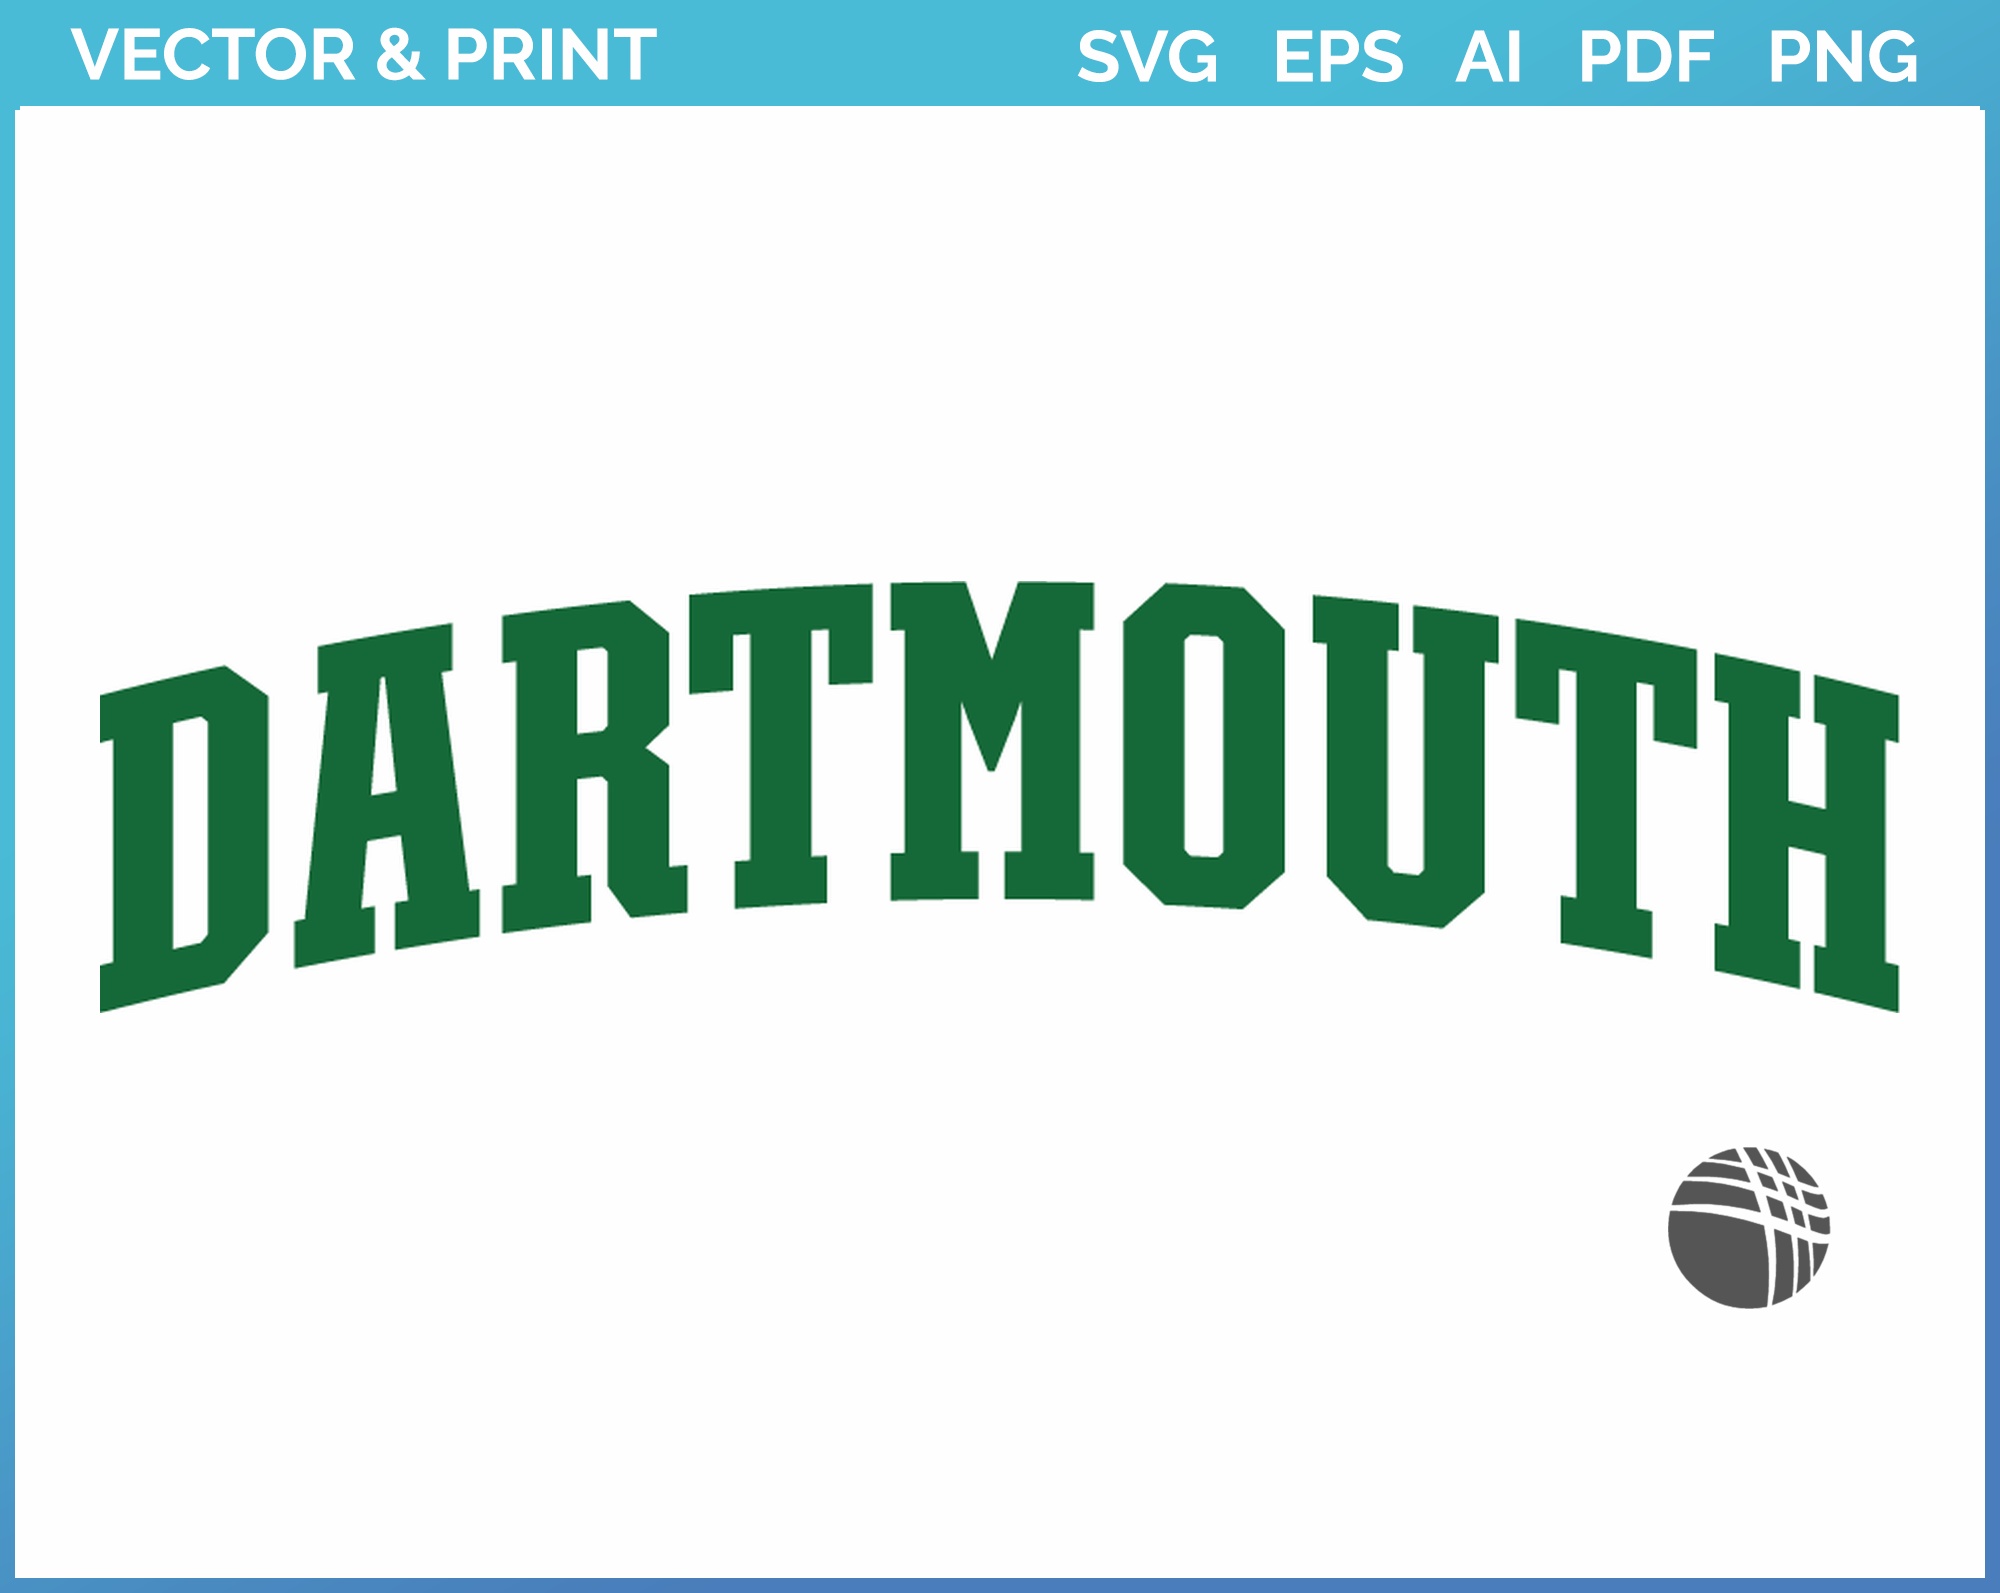 big green dartmouth college logo